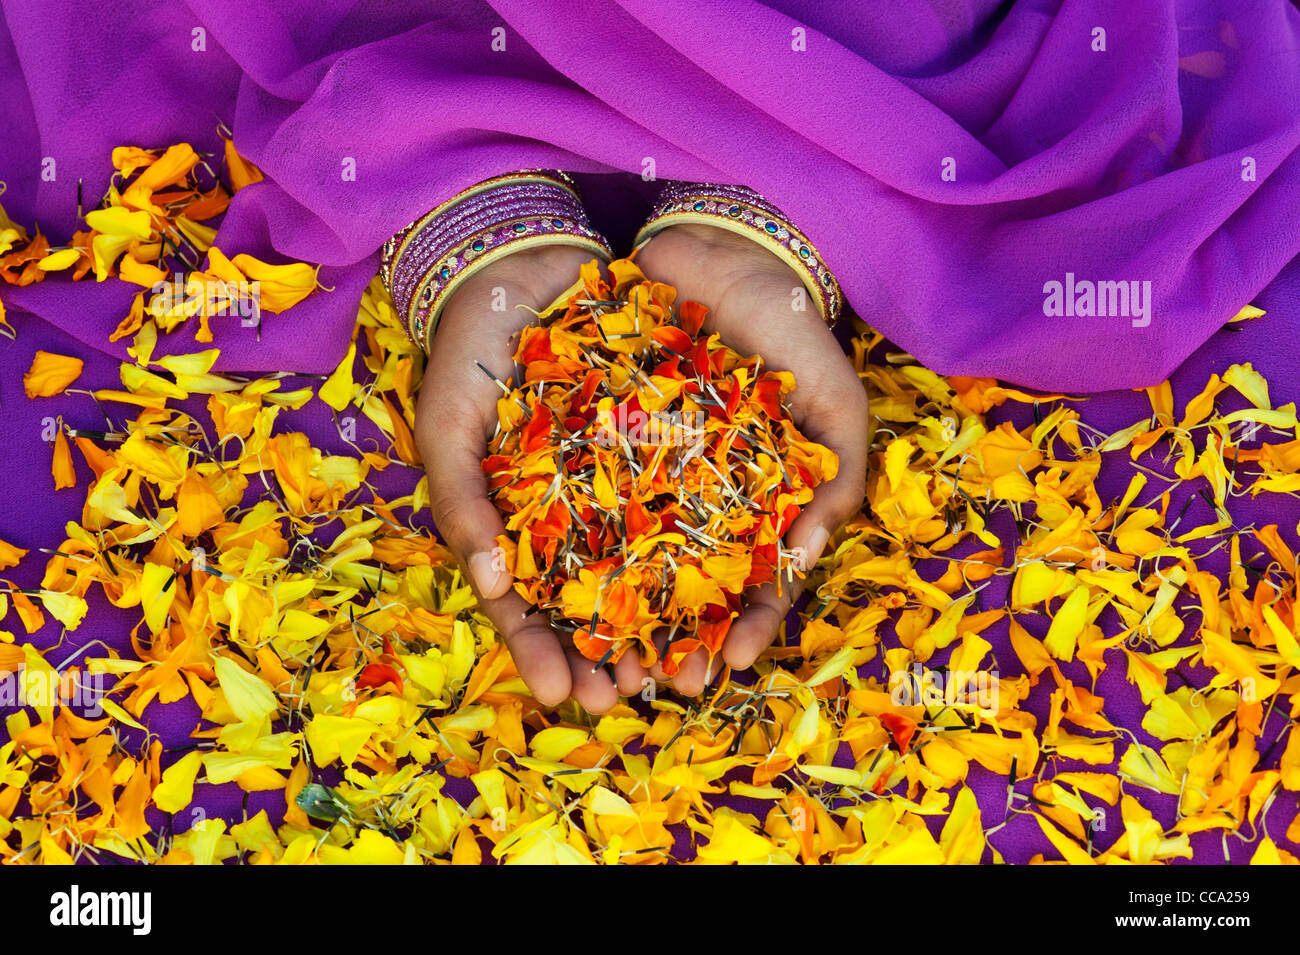 Indian girls hands holding marigold flower petals. Andhra Pradesh, India Stock Photo